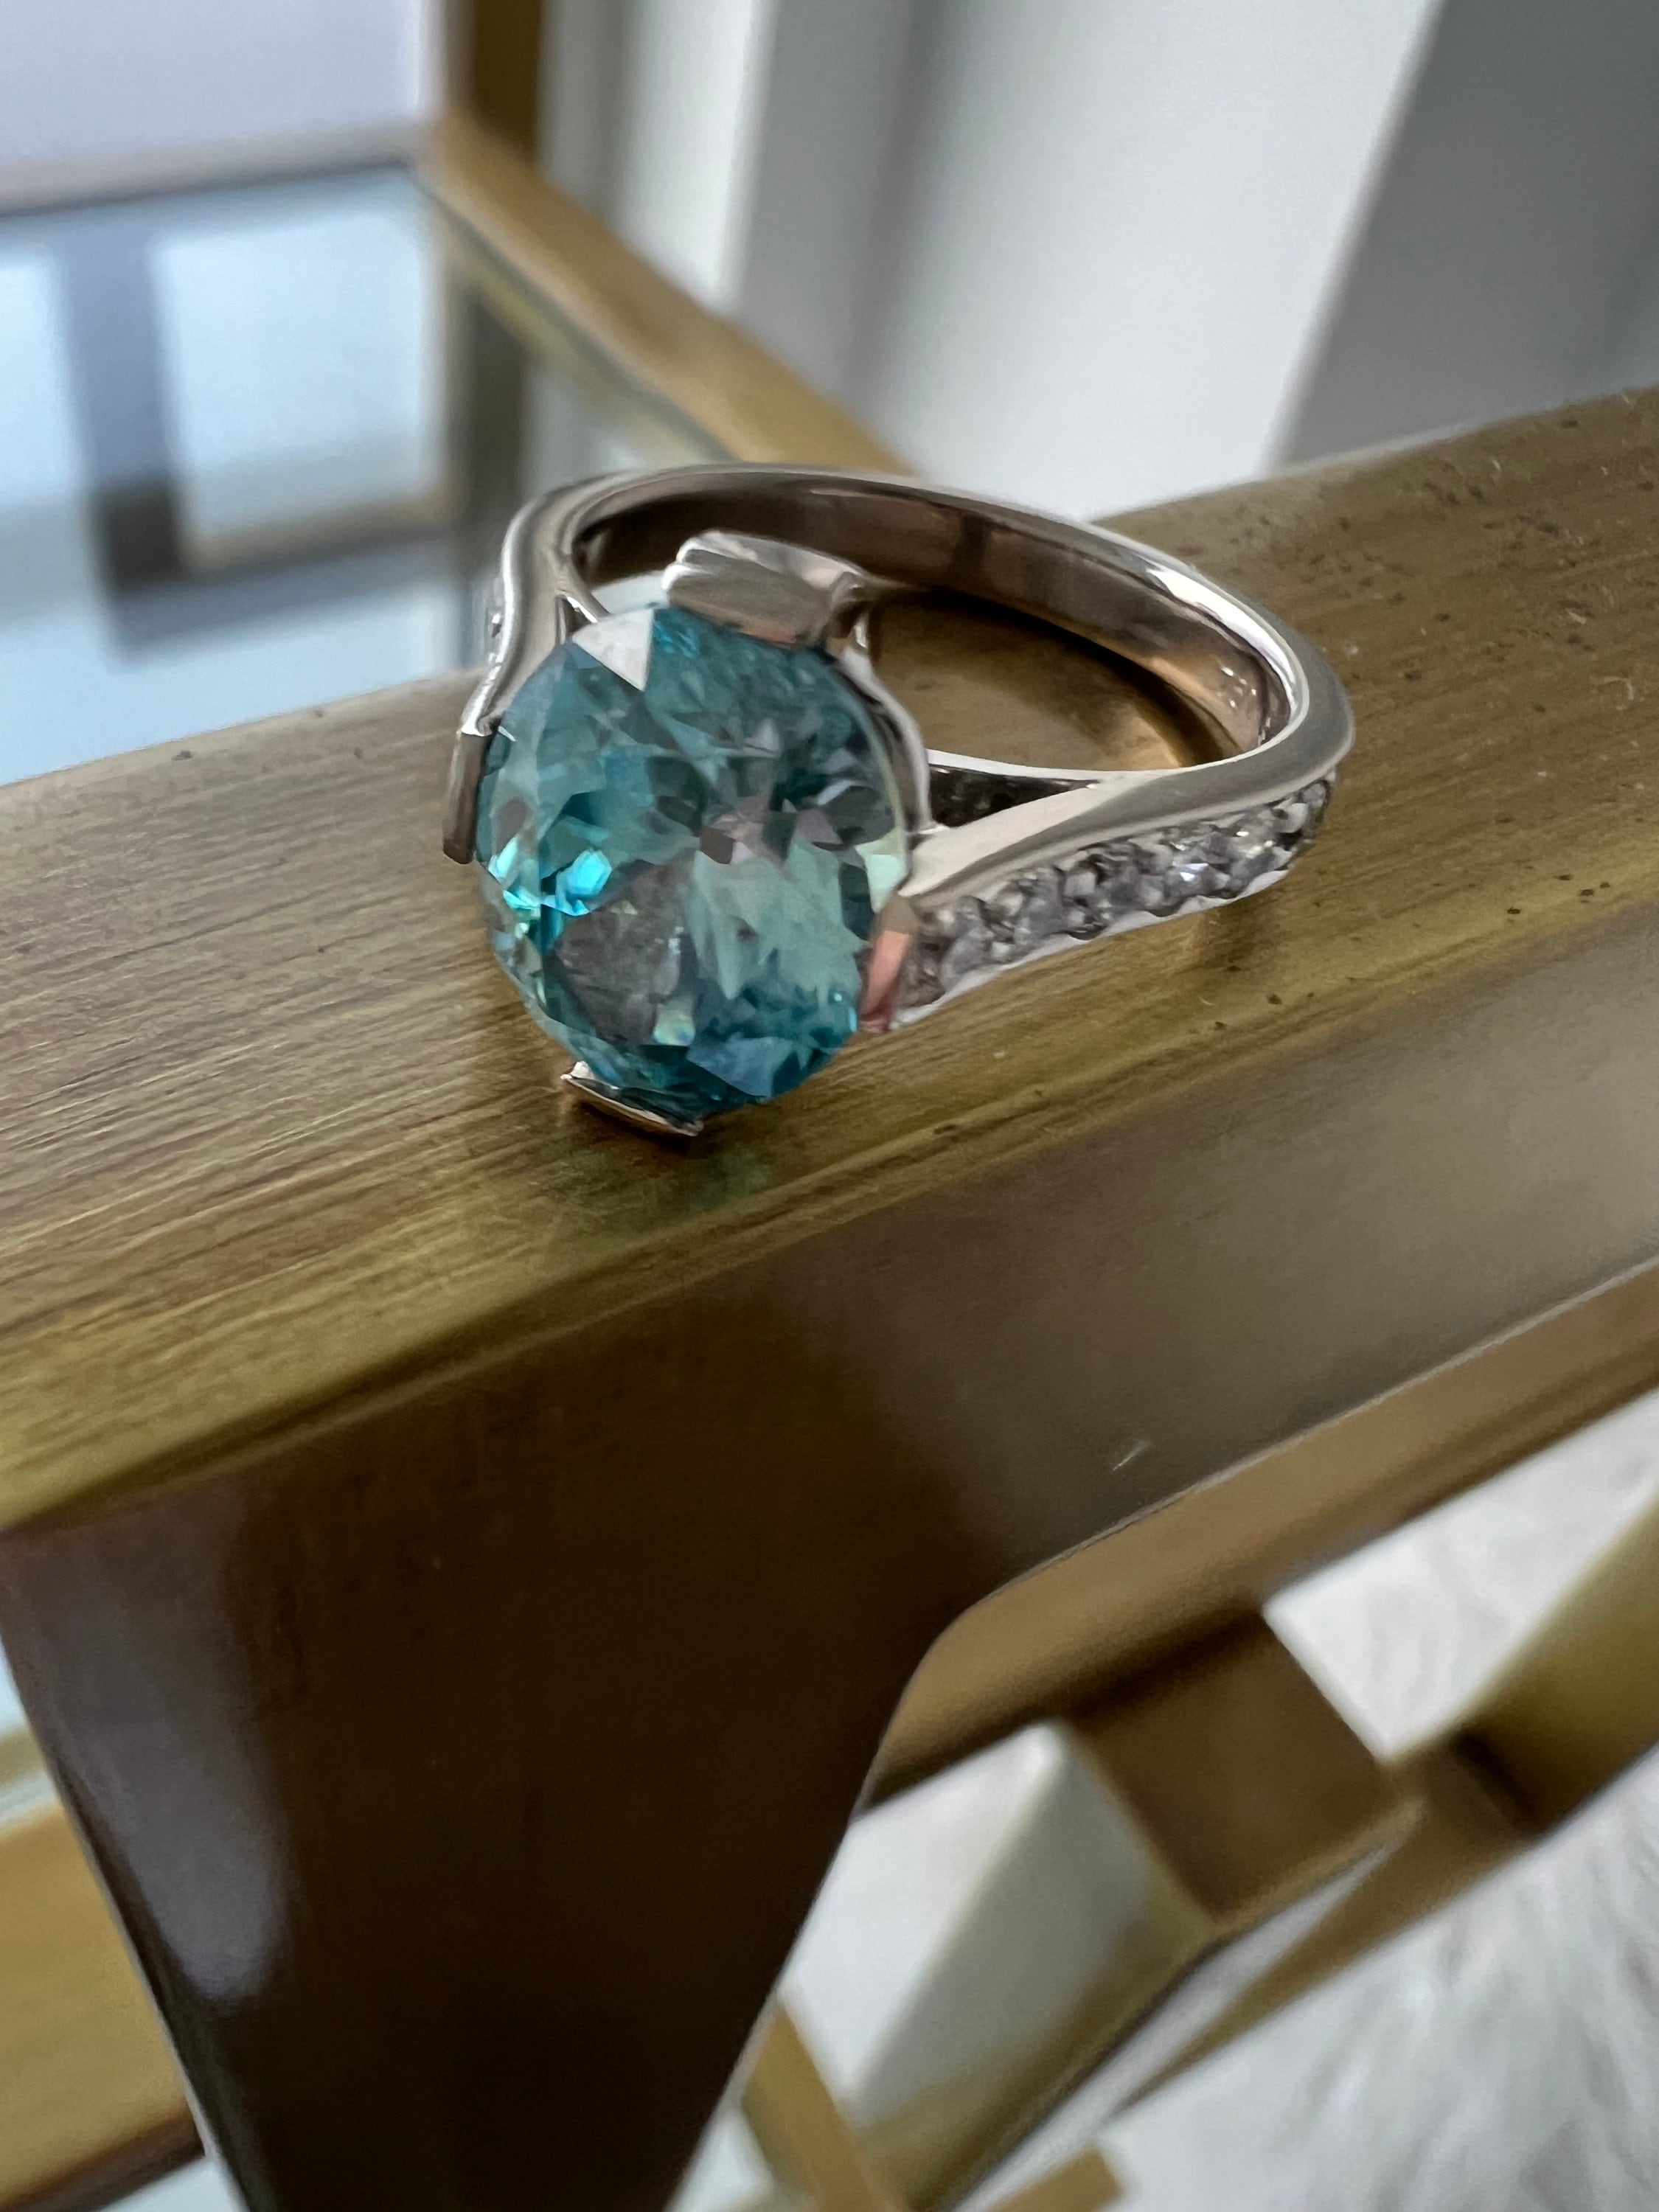 Stunning Vintage 18K White Gold Diamond and Blue Zircon Engagement Ring - 4.36ct.